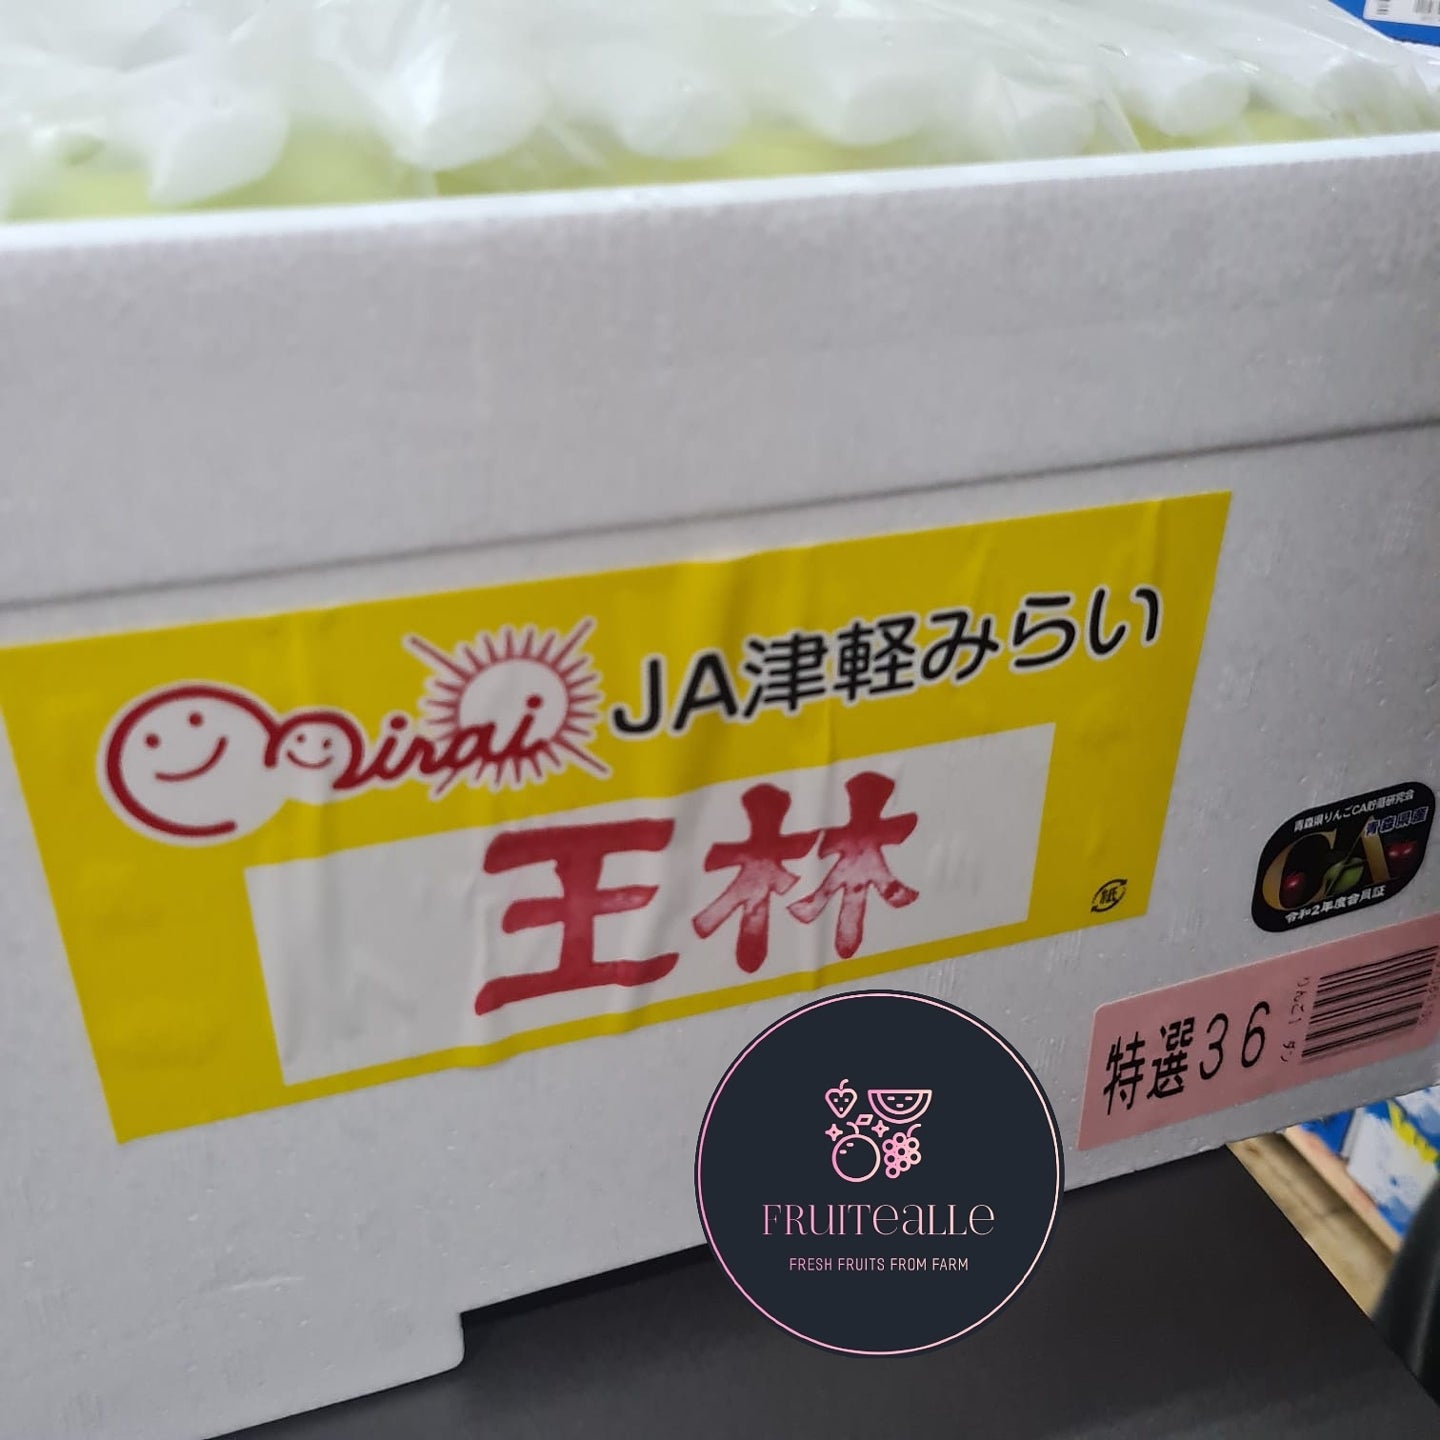 Japan Apple - Orin 王林 トキアップル